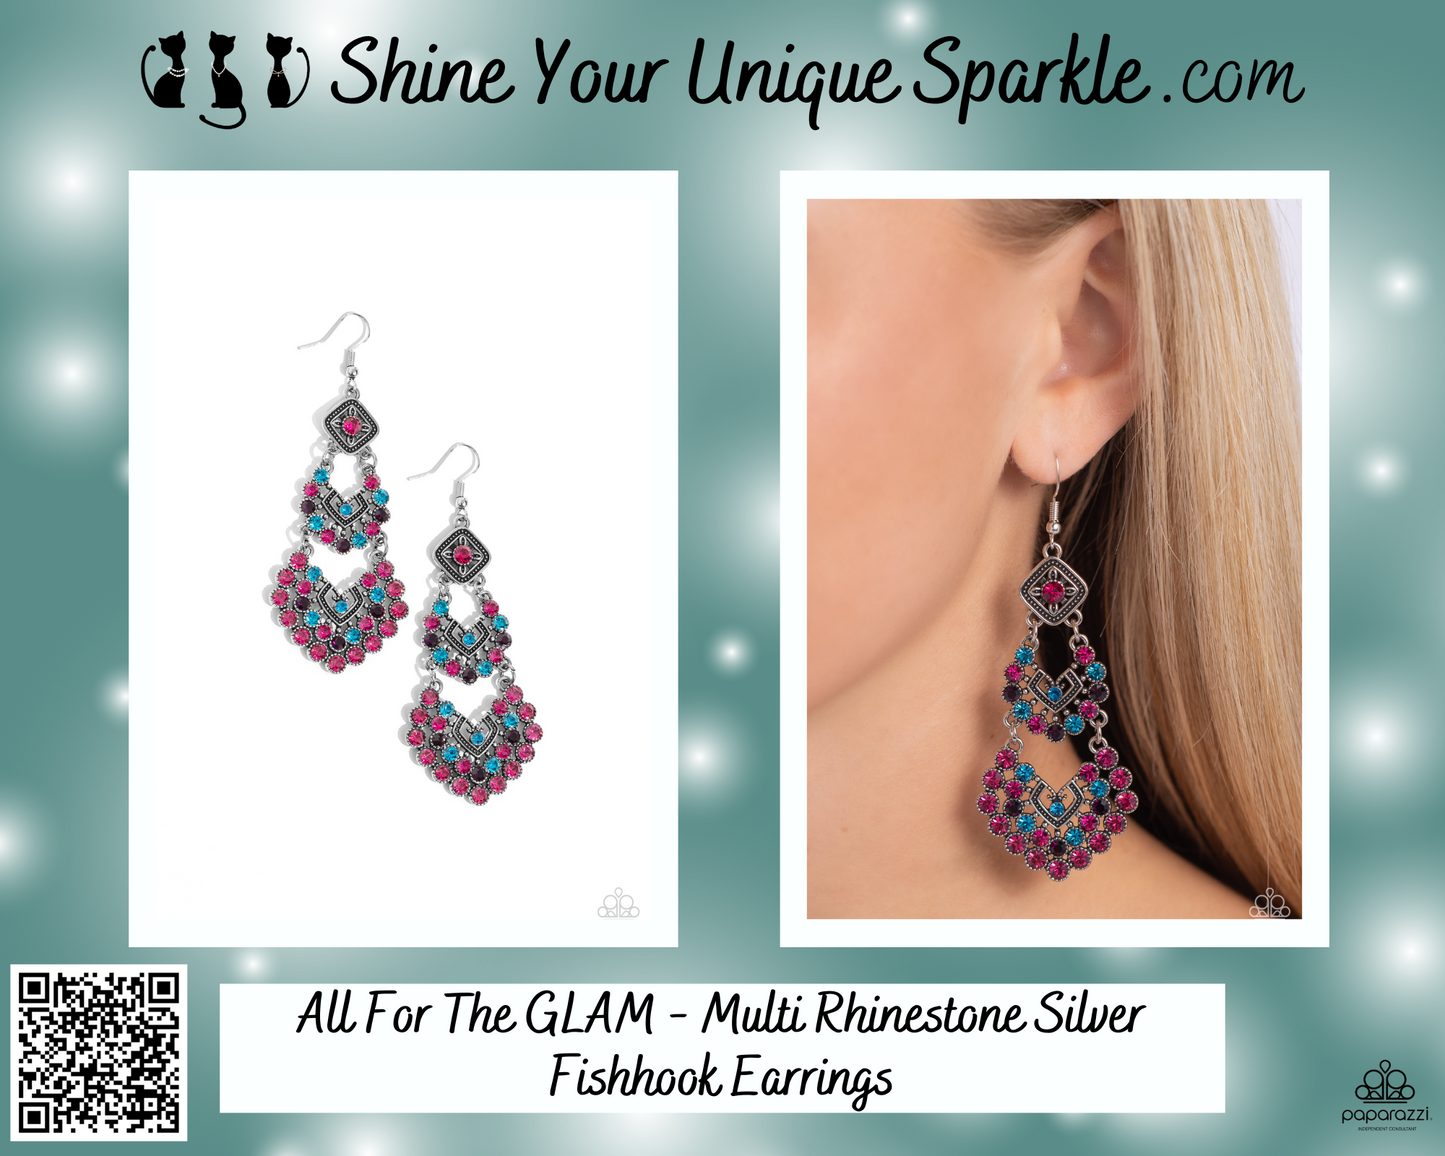 All For The GLAM - Multi Rhinestone Silver Fishhook Earrings